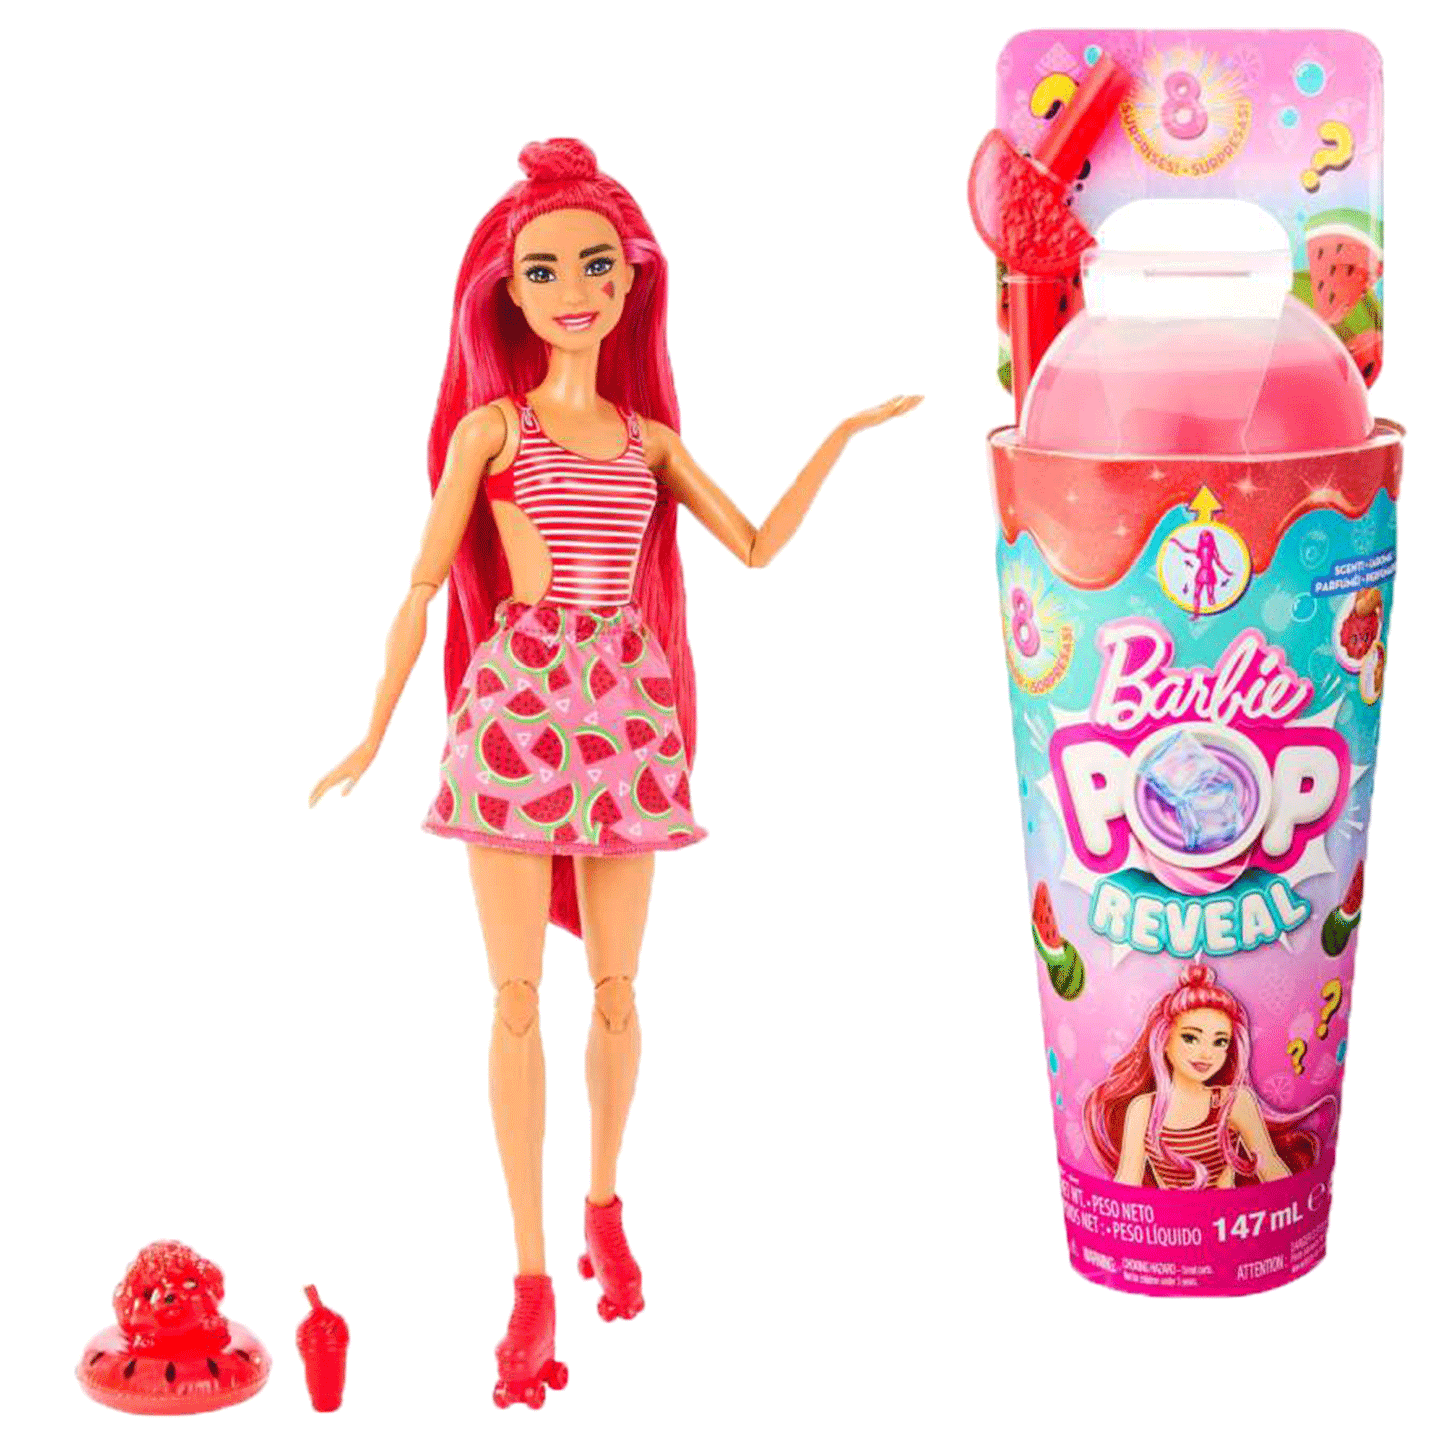 Barbie Pop Reveal Doll - Assorted*